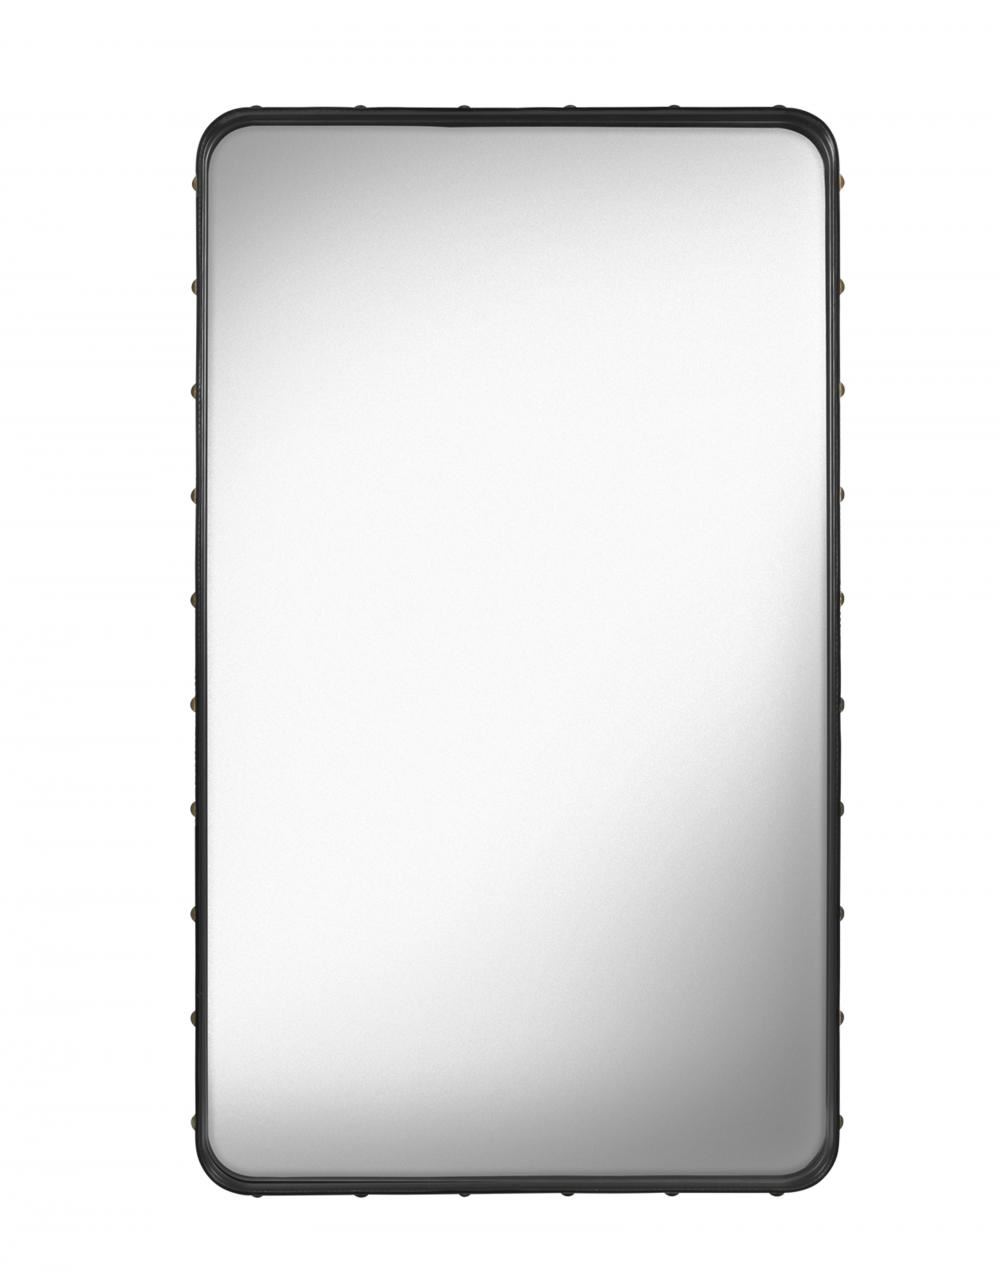 Adnet Rectangulaire Wall Mirror Medium Black